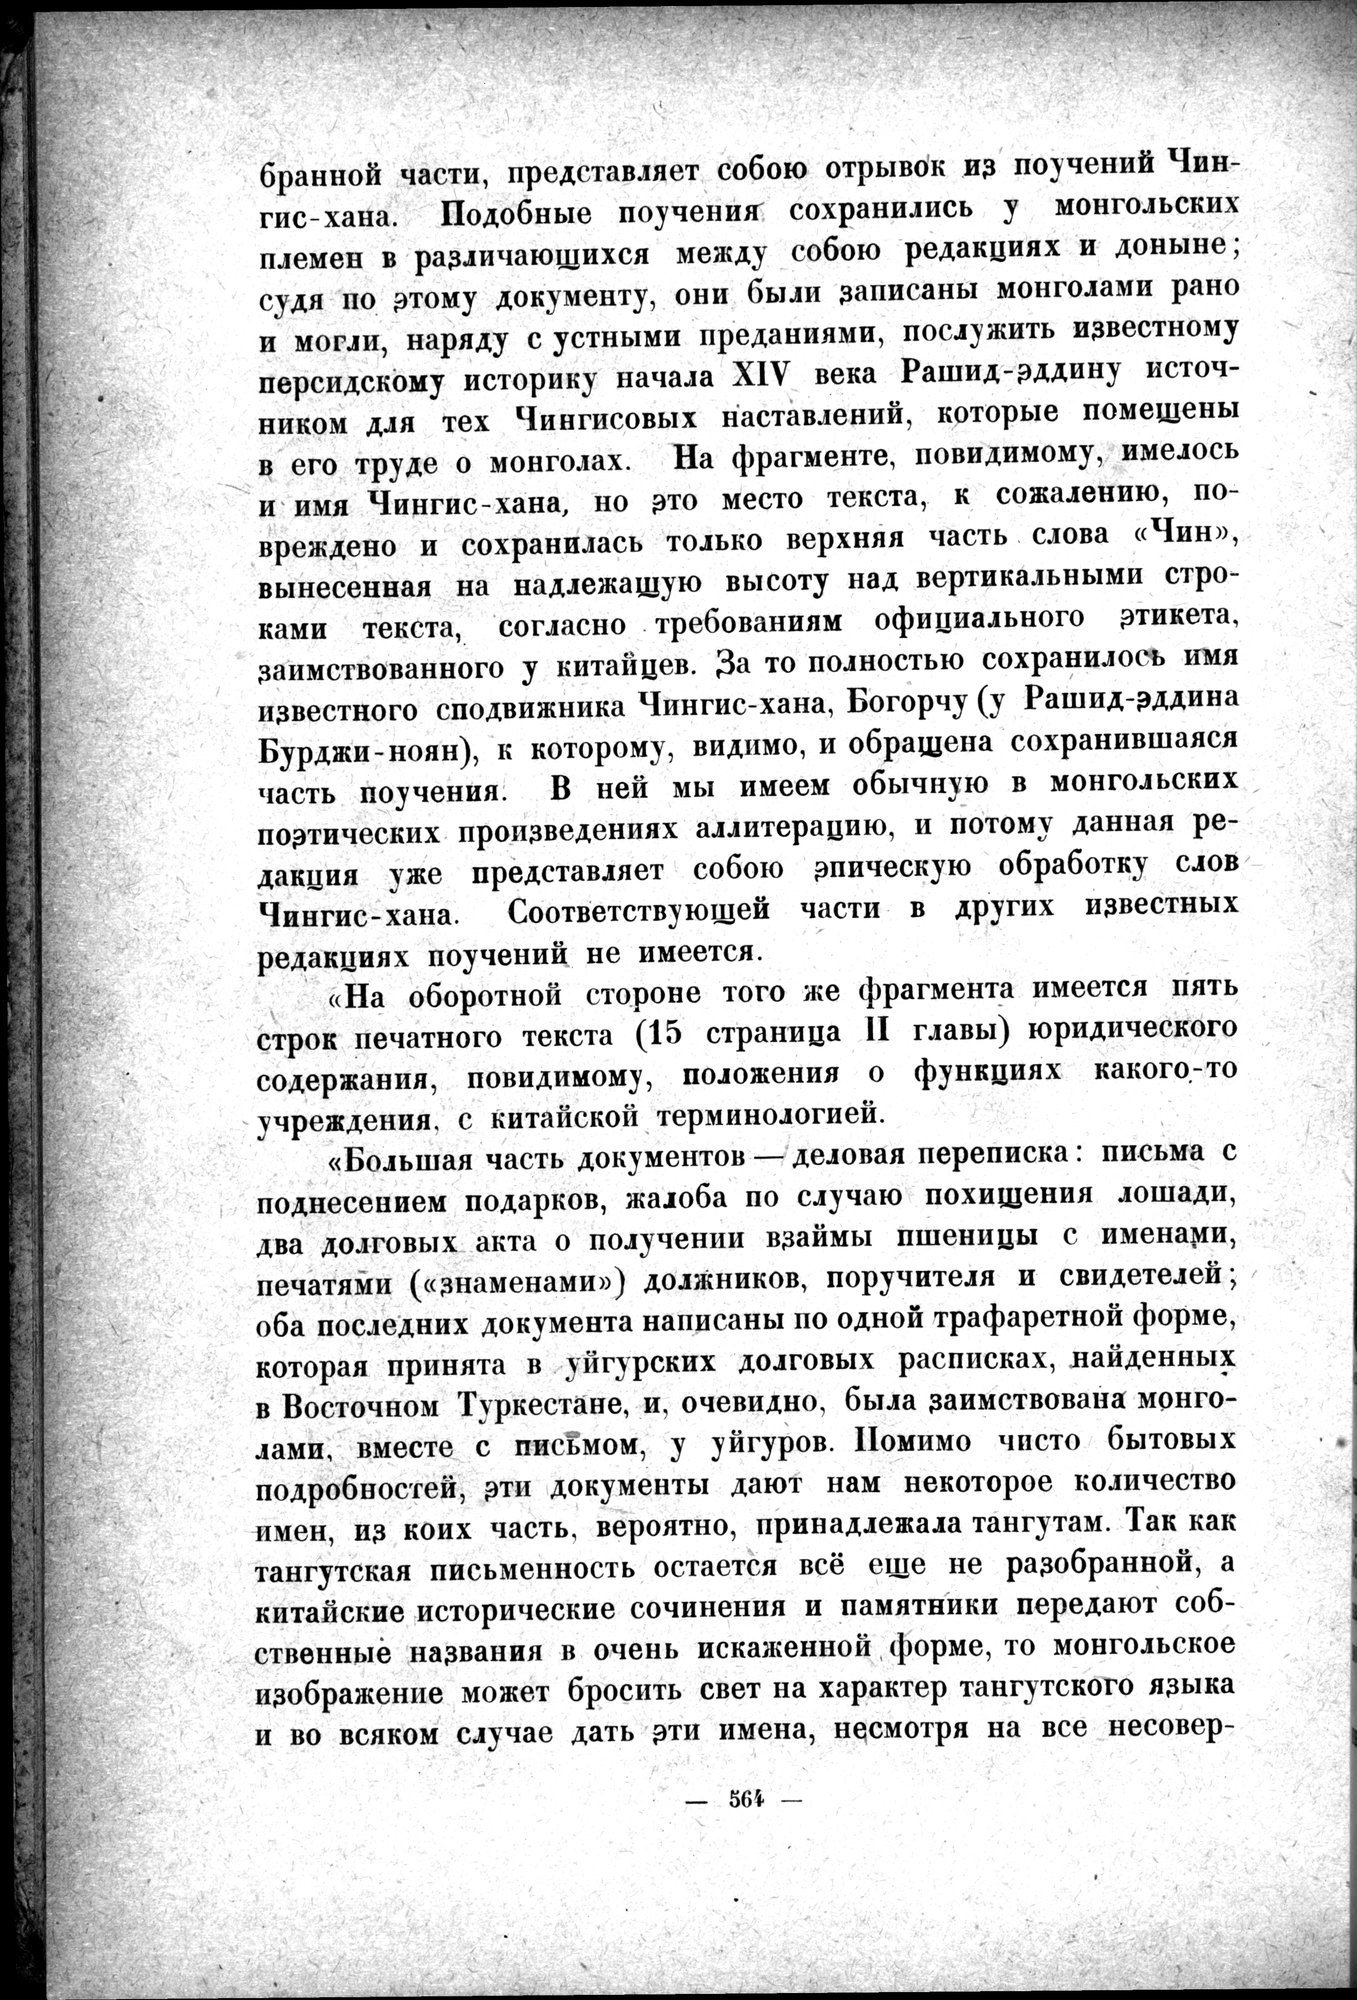 Mongoliya i Amdo i mertby gorod Khara-Khoto : vol.1 / Page 650 (Grayscale High Resolution Image)